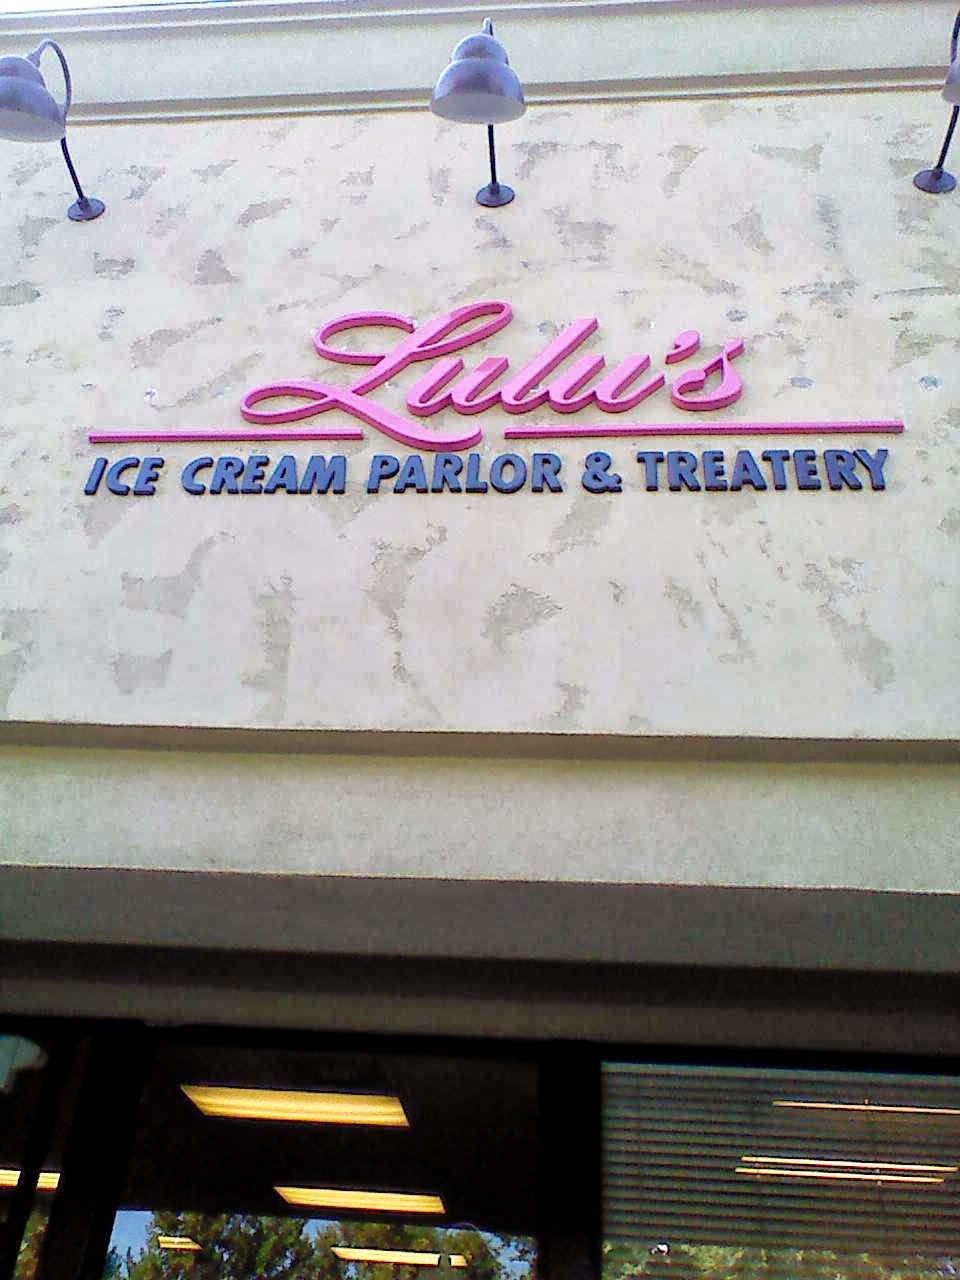 Lulu's Ice Cream Parlor & Treatery